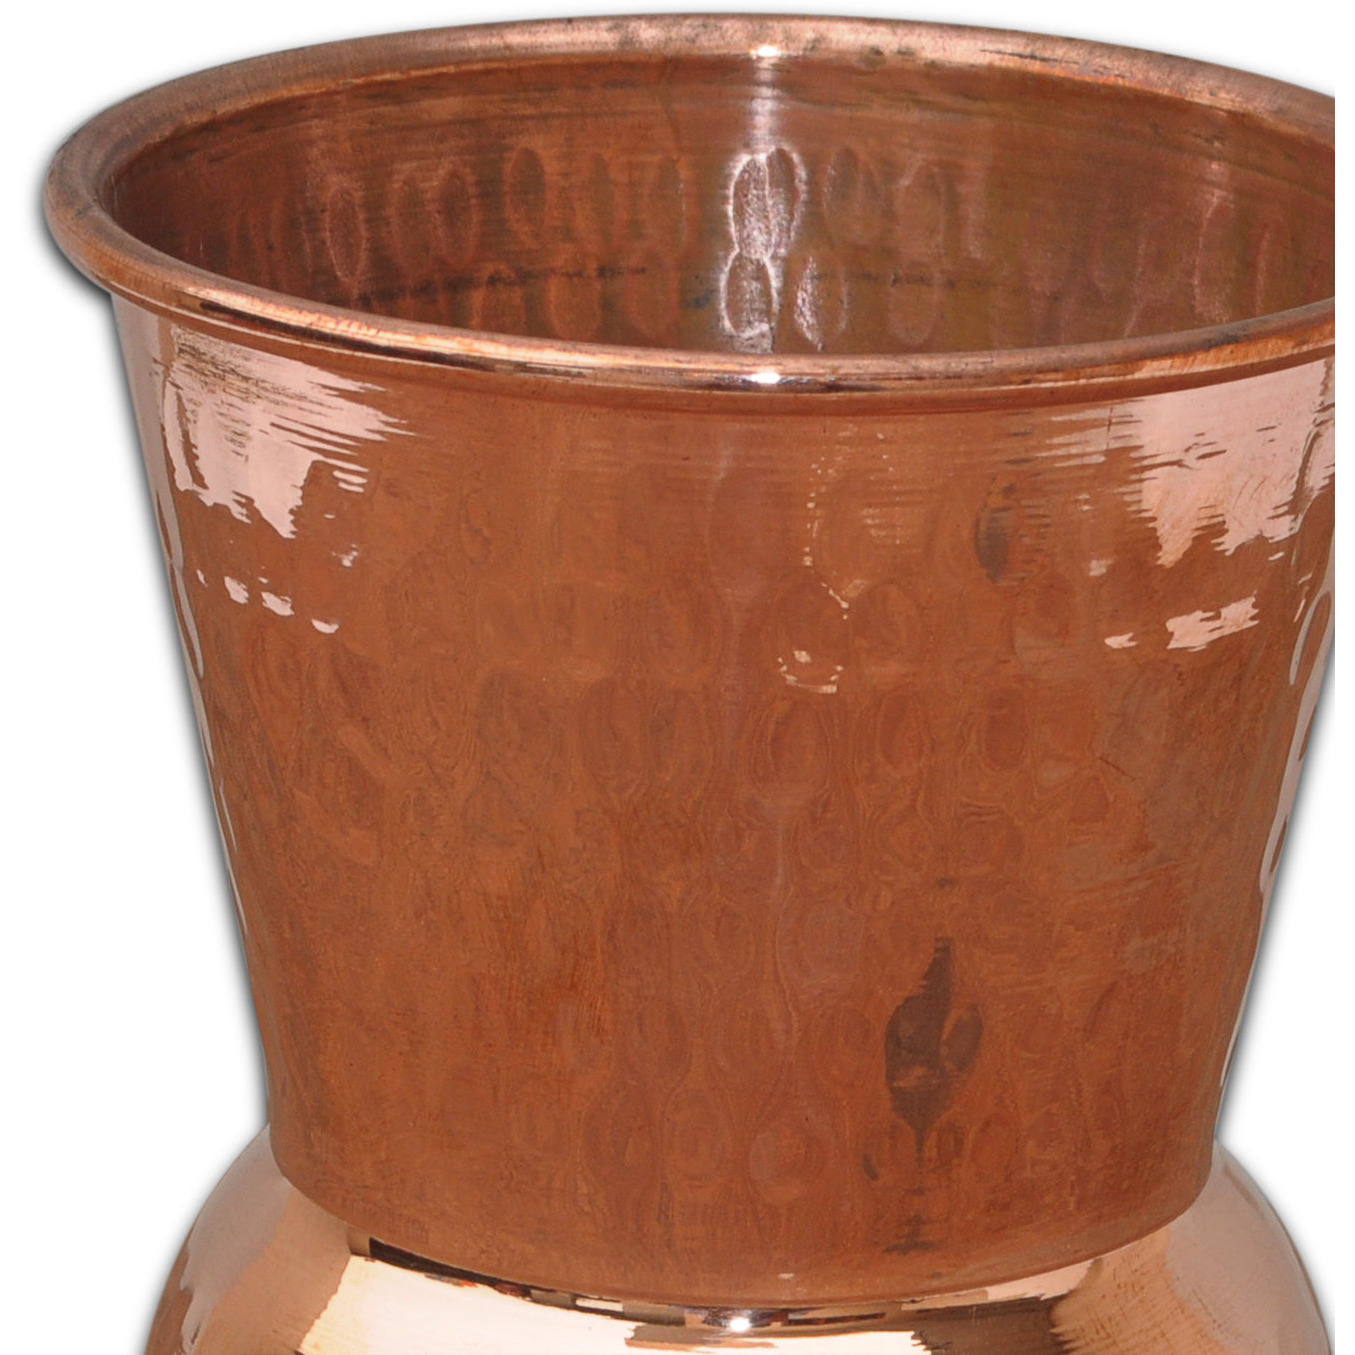 Set of 5 - Prisha India Craft B. Copper Muglai Matka Glass Hammered Style Drinkware Tumbler Handmade Copper Cups - Traveller's Copper Mug for Ayurveda Benefits